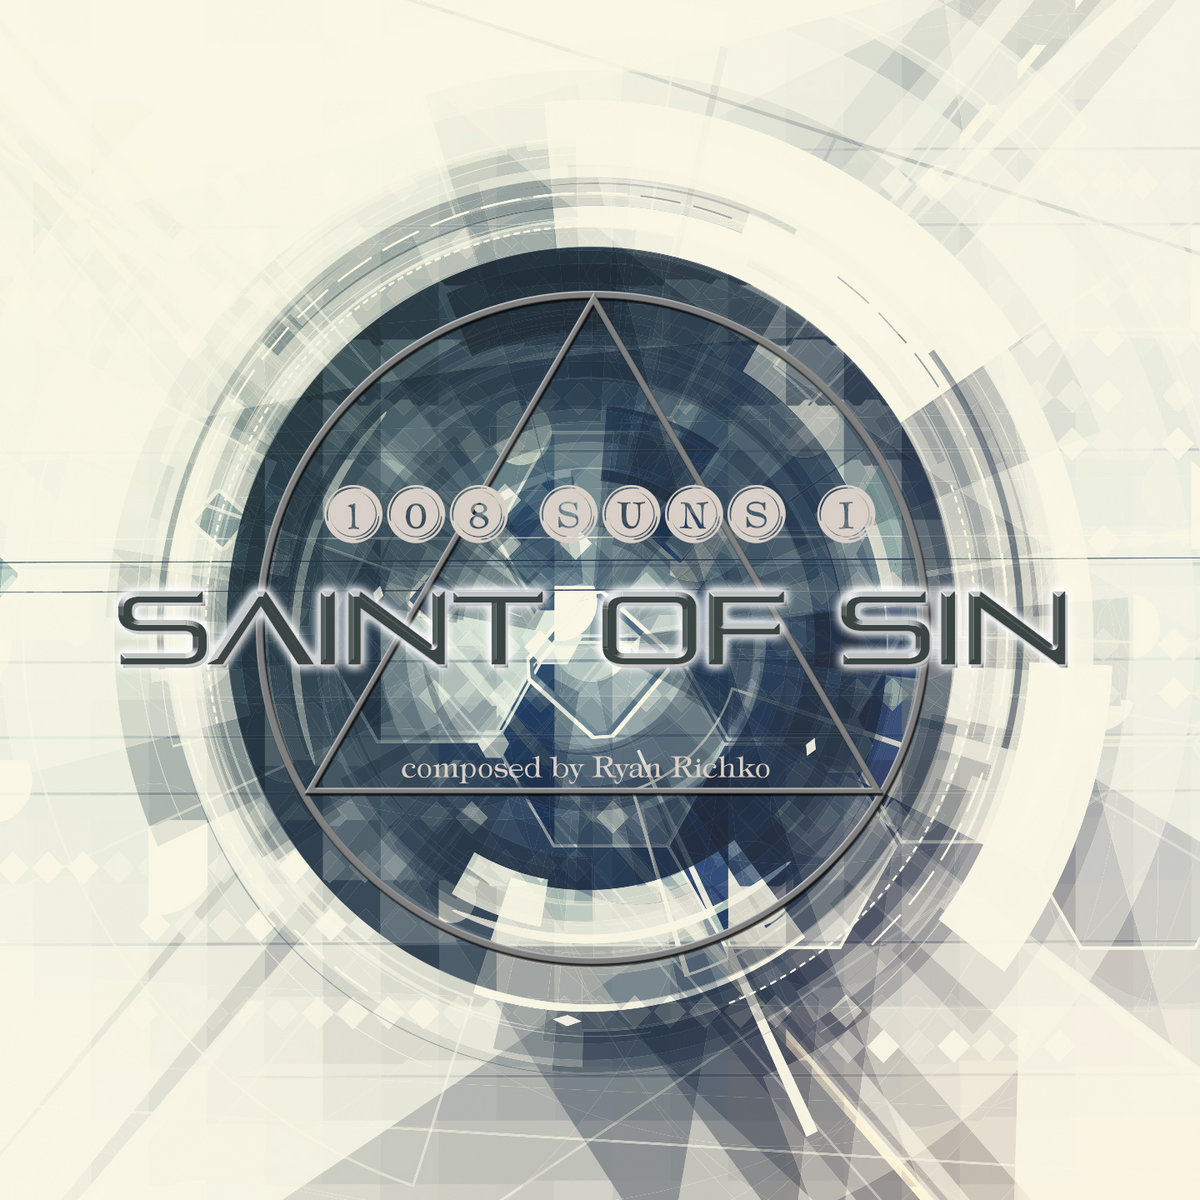 Saint Of Sin feat. Ryan Richko - 108 Suns I (Original Mix)